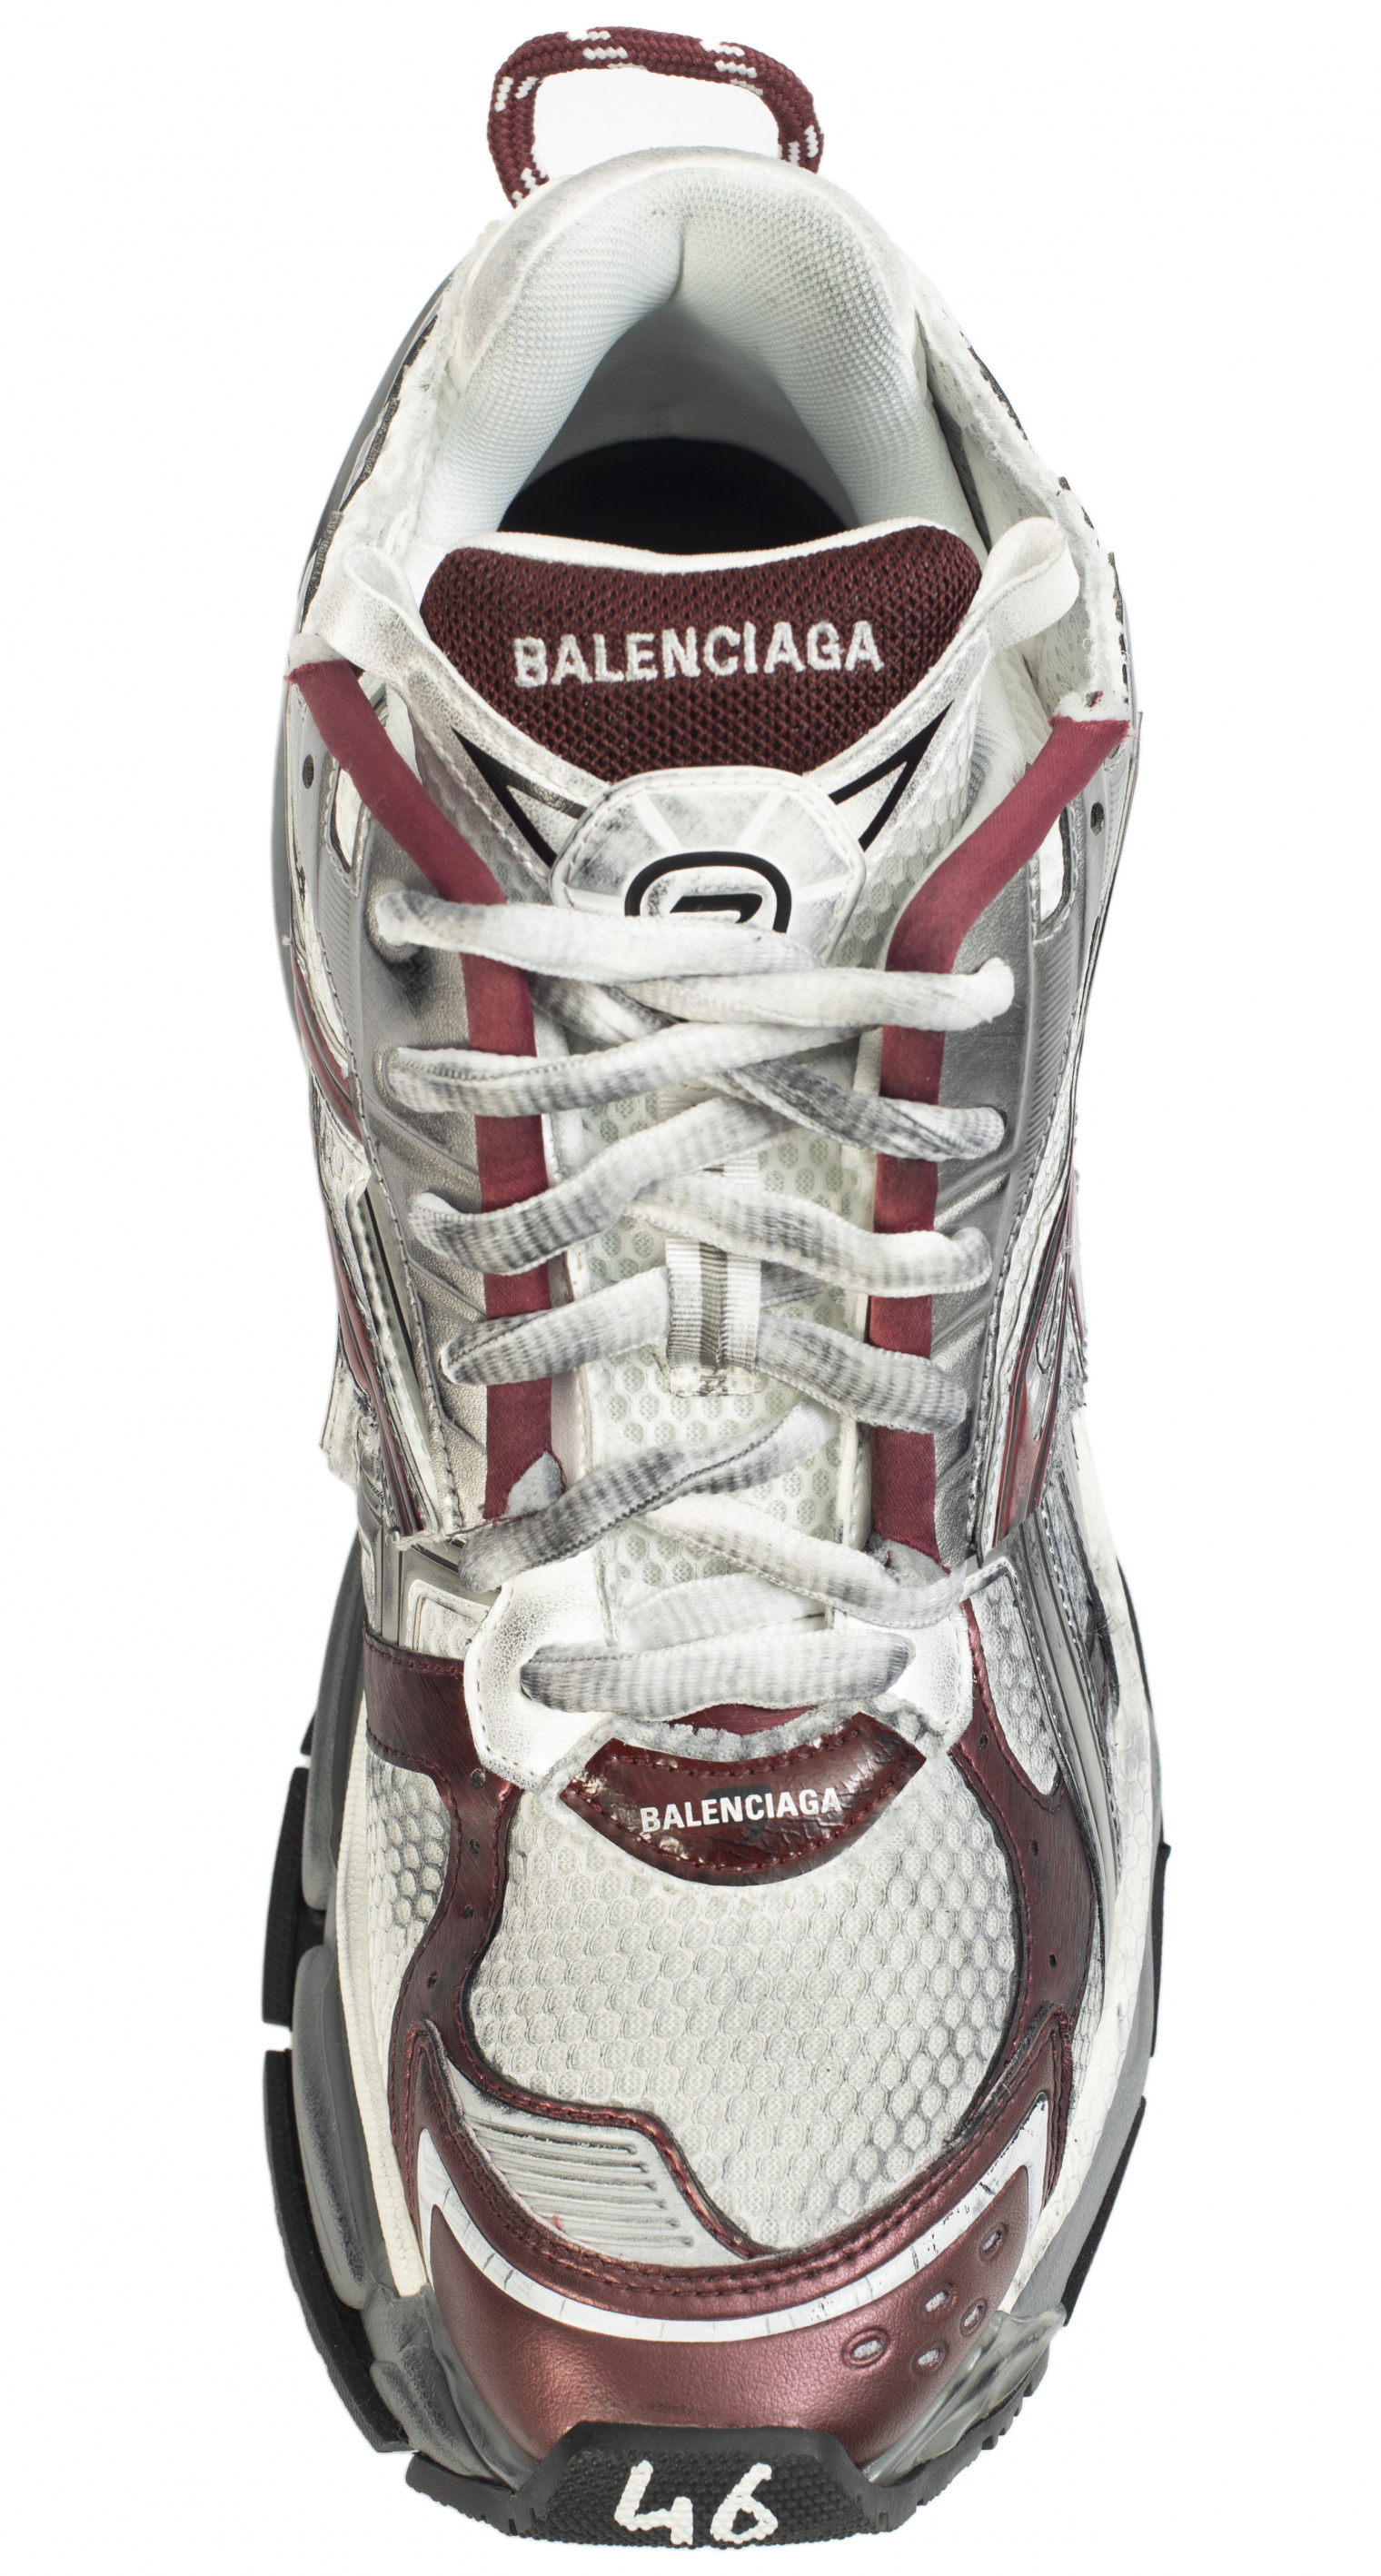 Balenciaga Runner Sneakers in grey/burgundy